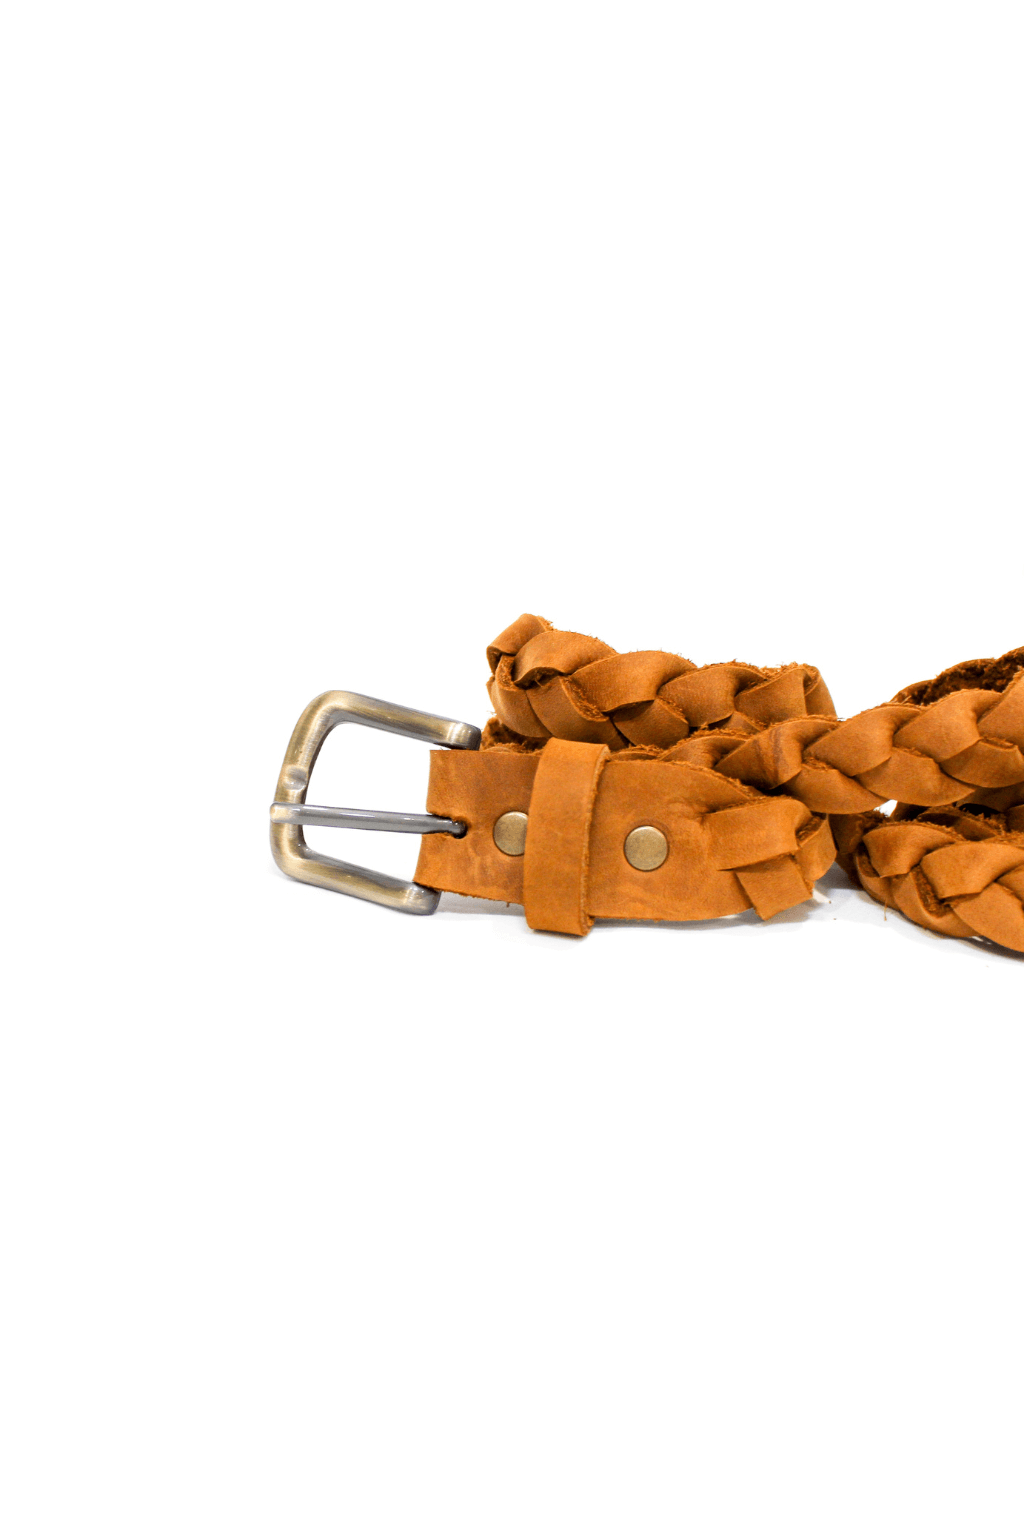 Leather Plaited Belt- tan